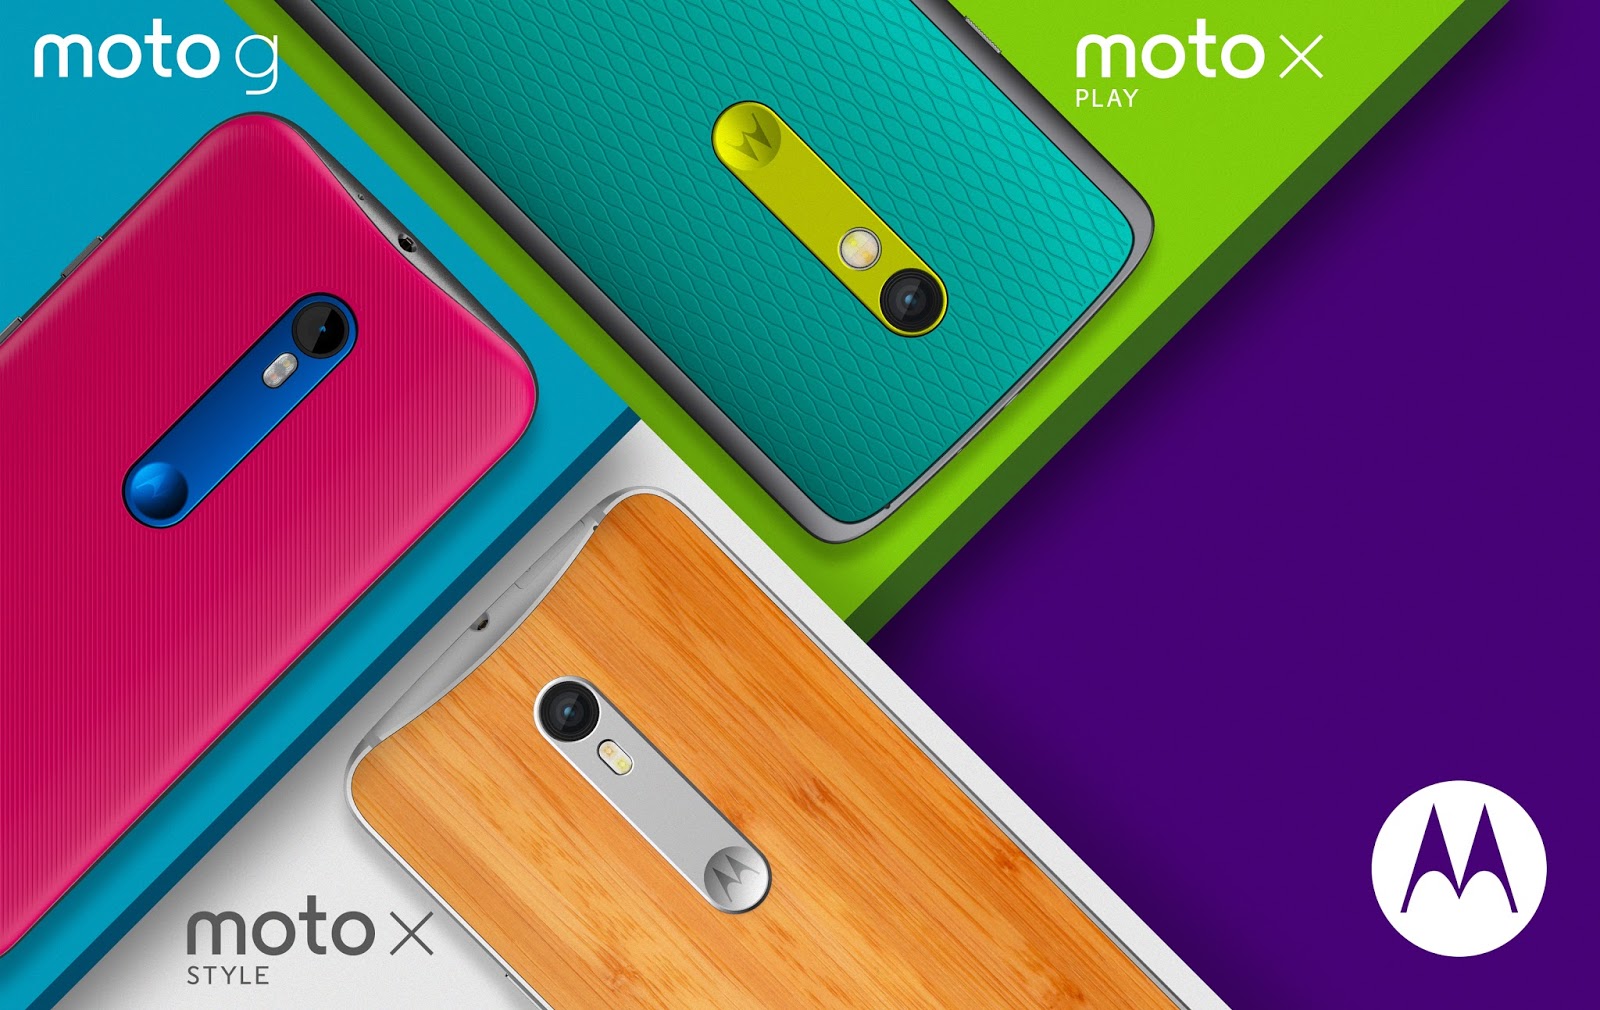 Motorola announces new Moto G, Moto X Play and Moto X Style